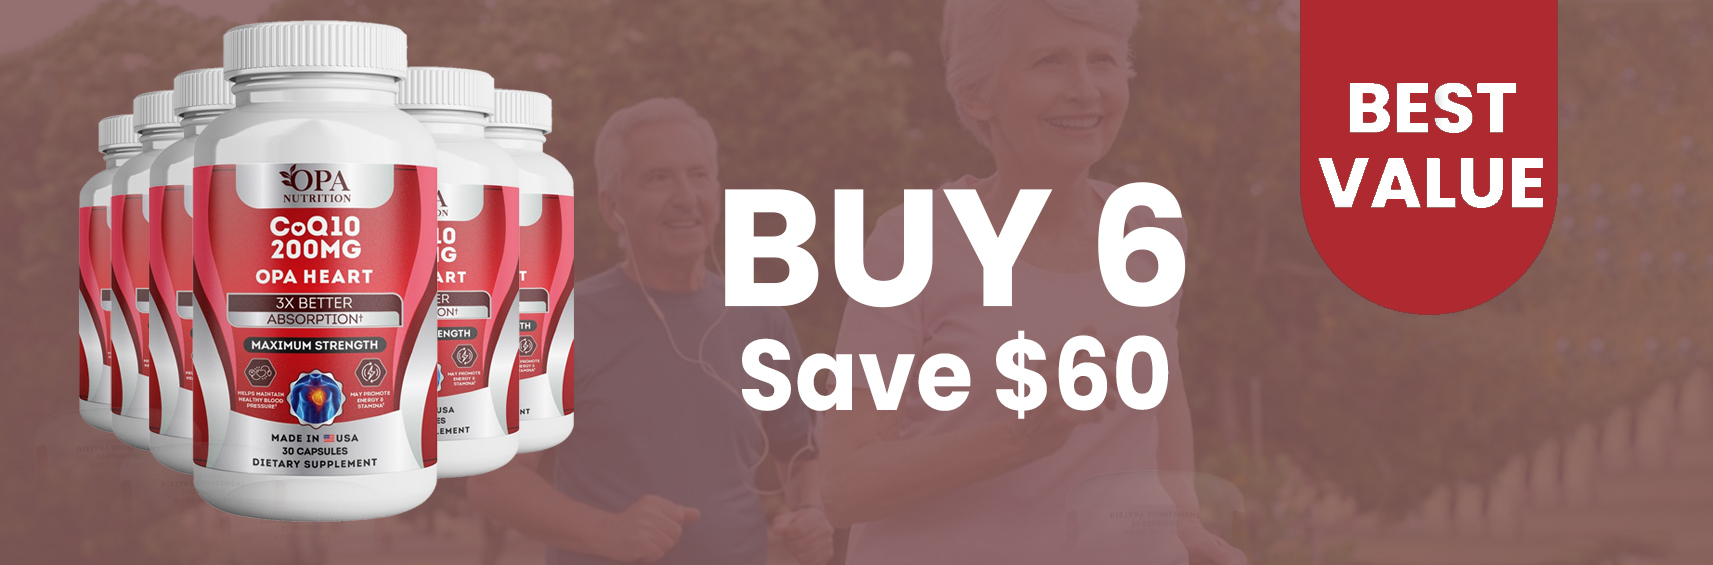 opa Heart Health Buy 6 save get 60 dollars